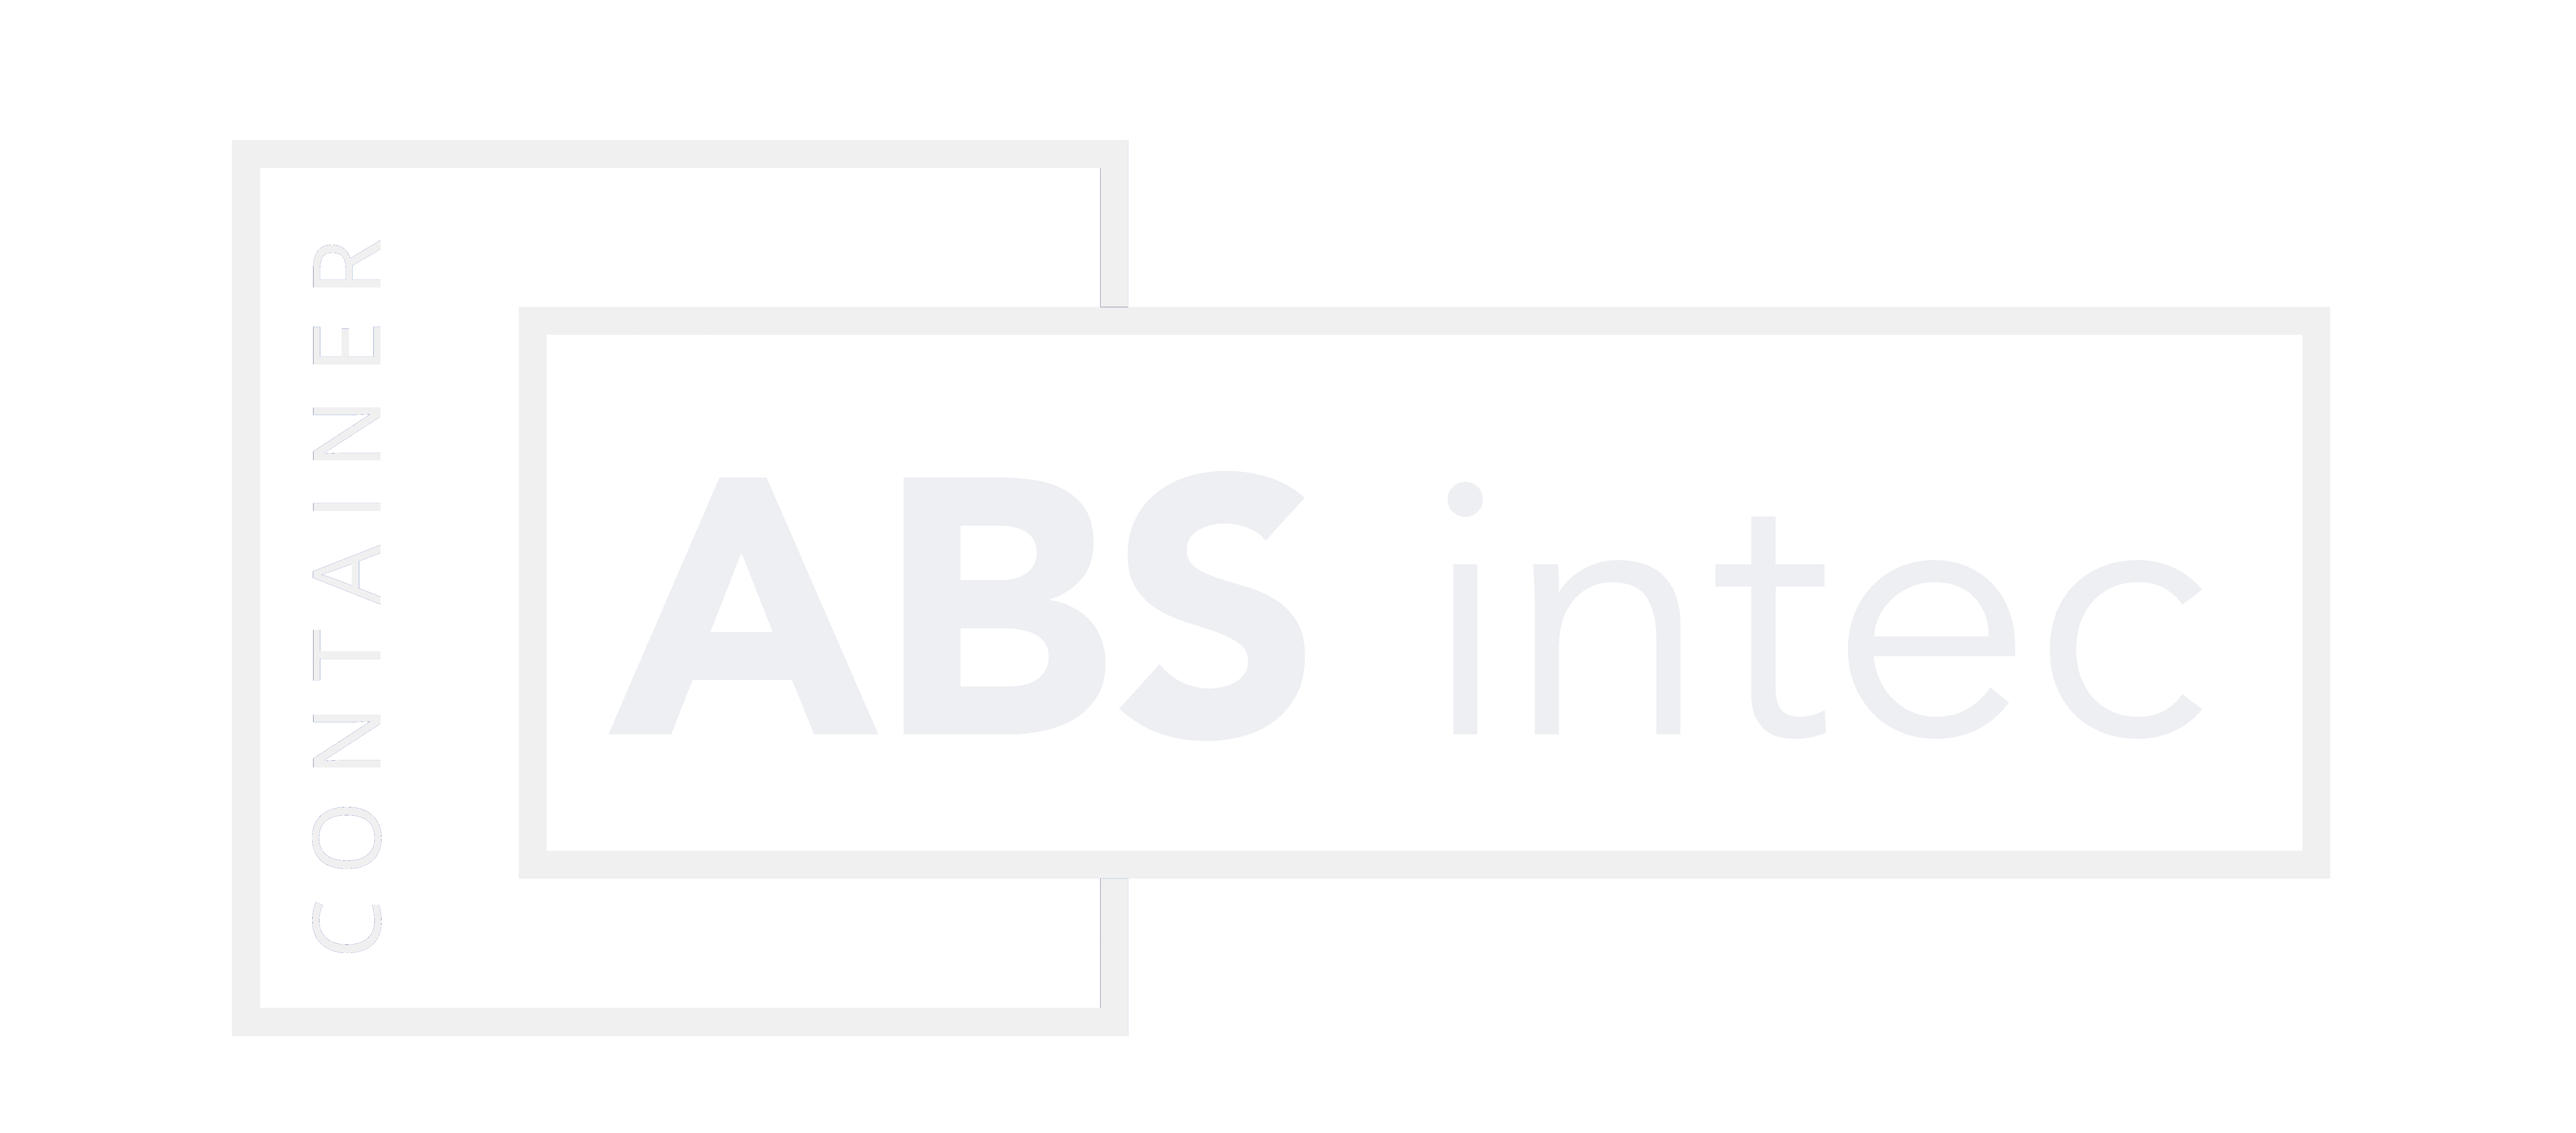 ABS intec - Technikcontainer Logo ABS intec weiss V2 - Über uns